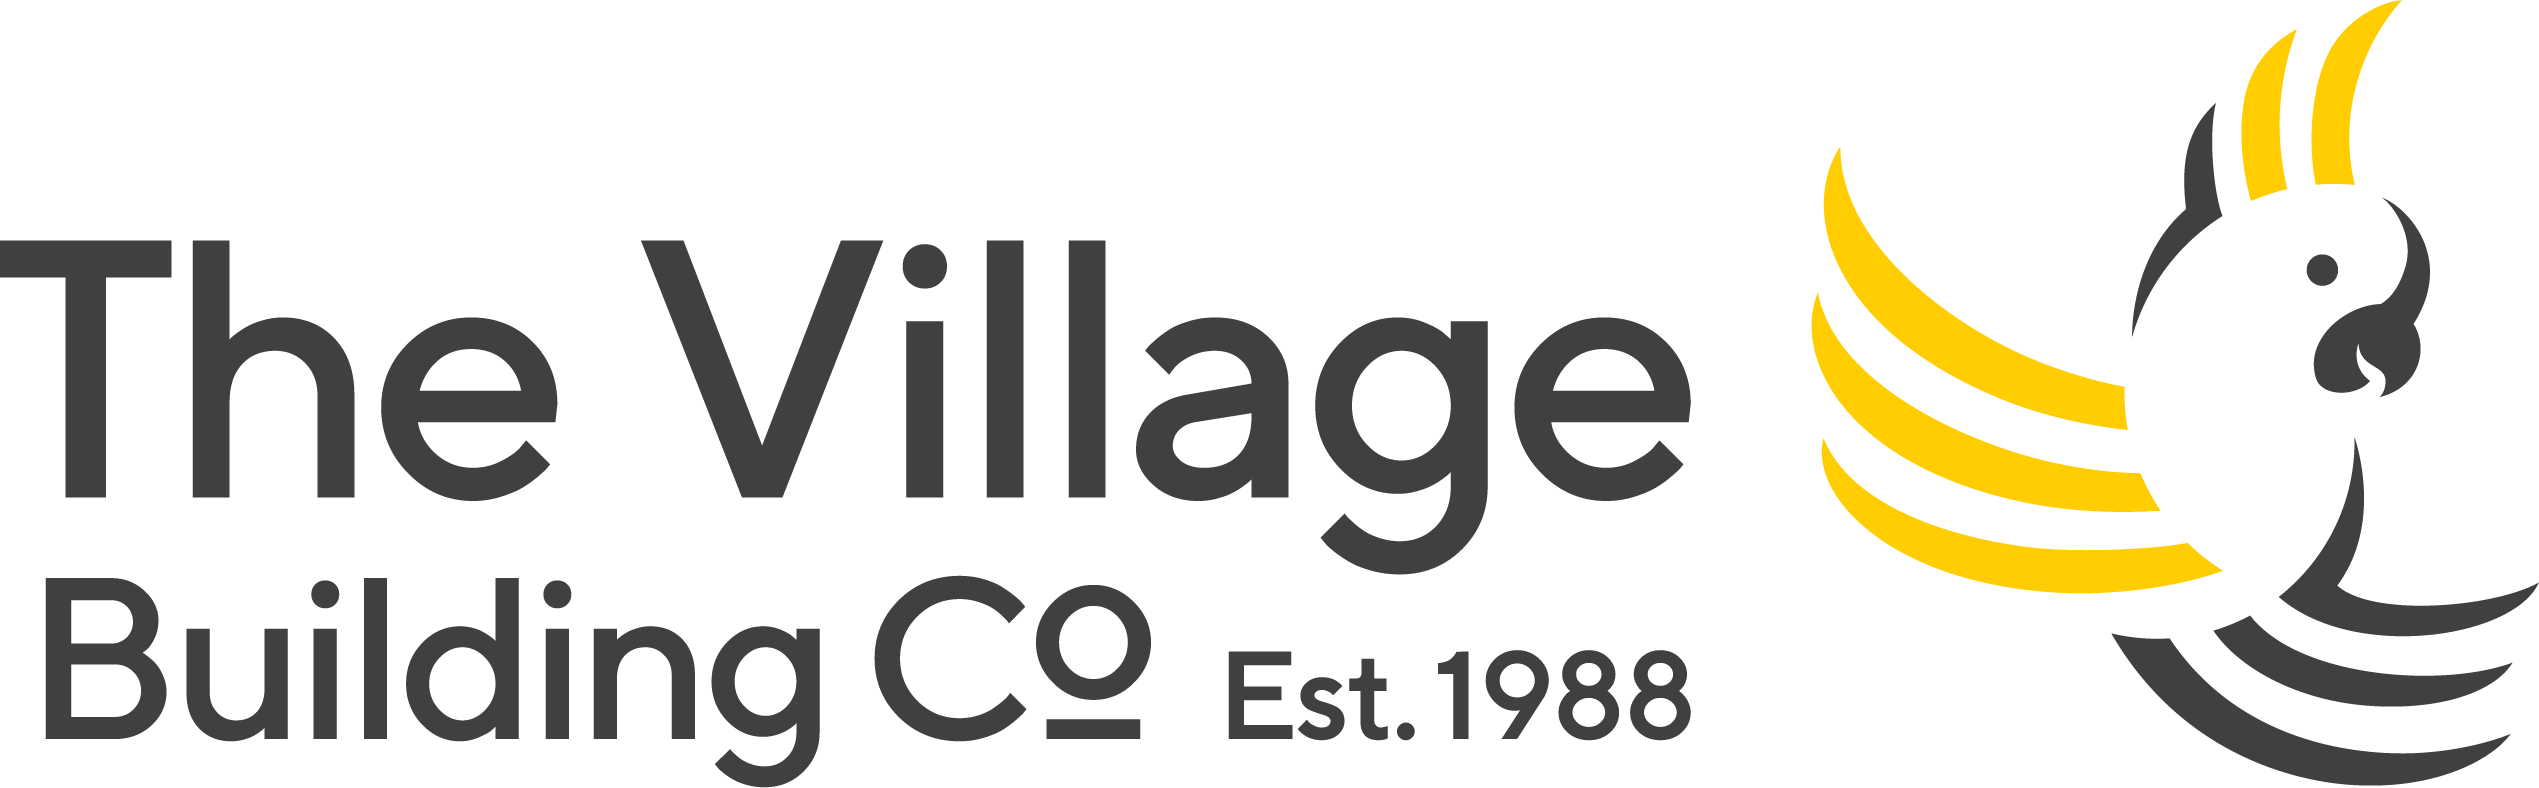 The Village Building Co.